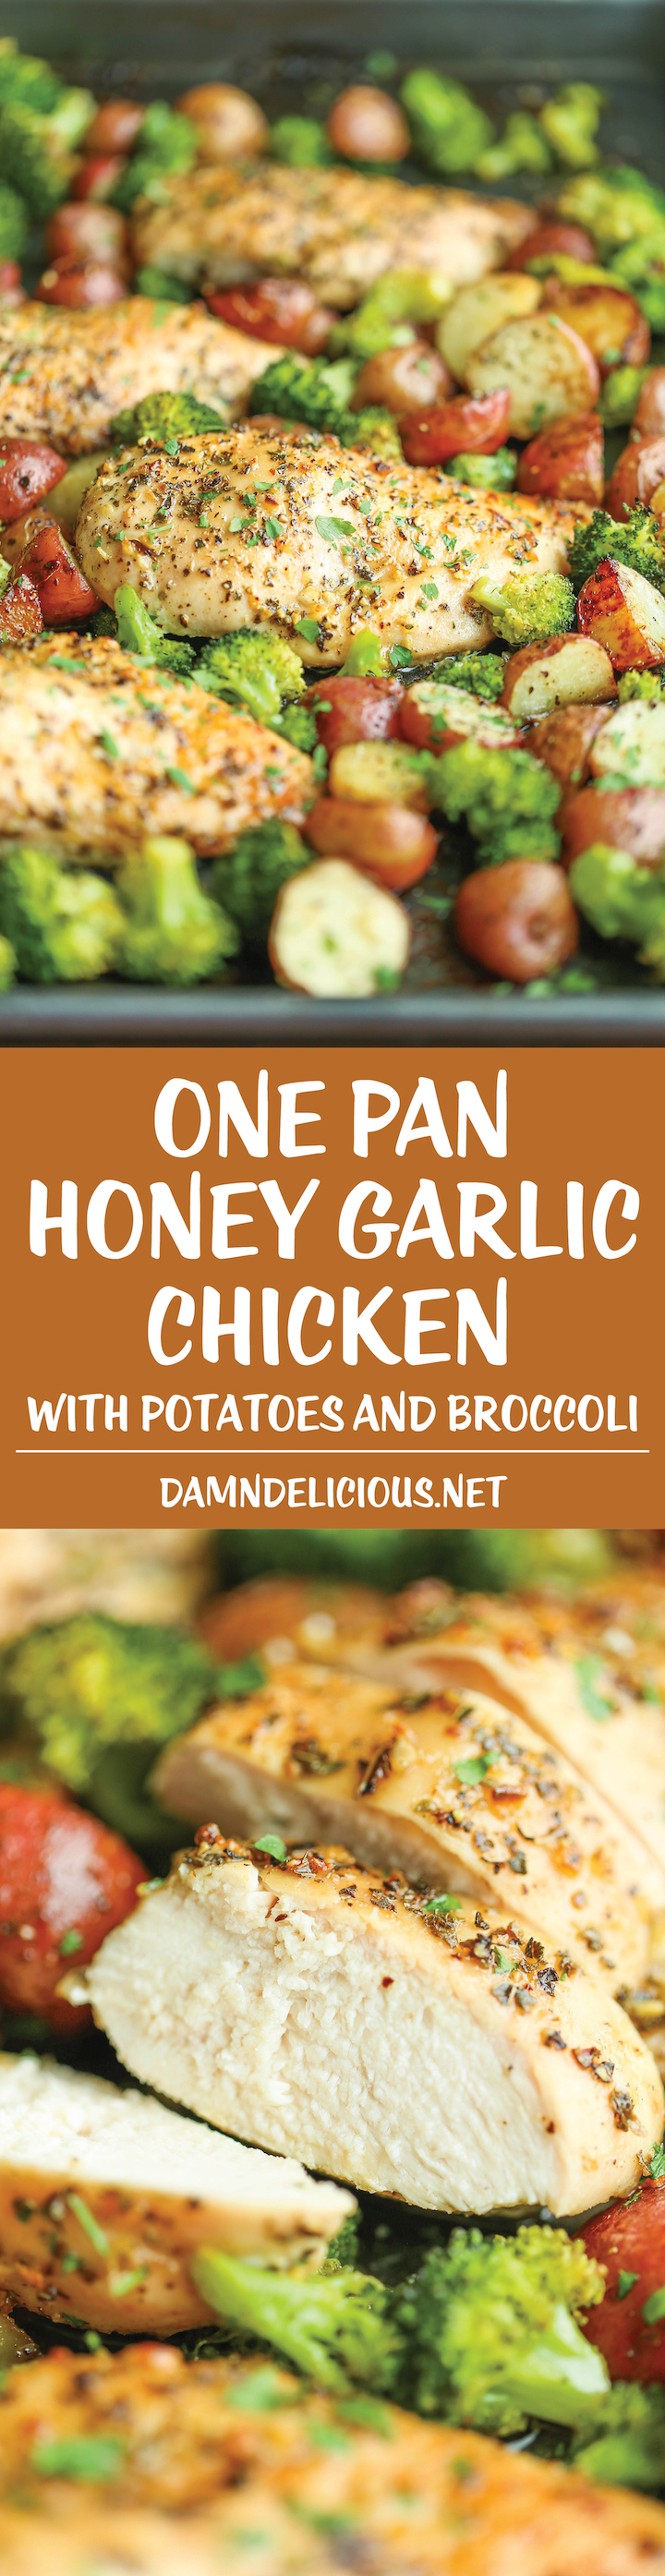 Slow Cooker Honey Garlic Chicken and Veggies - Damn Delicious